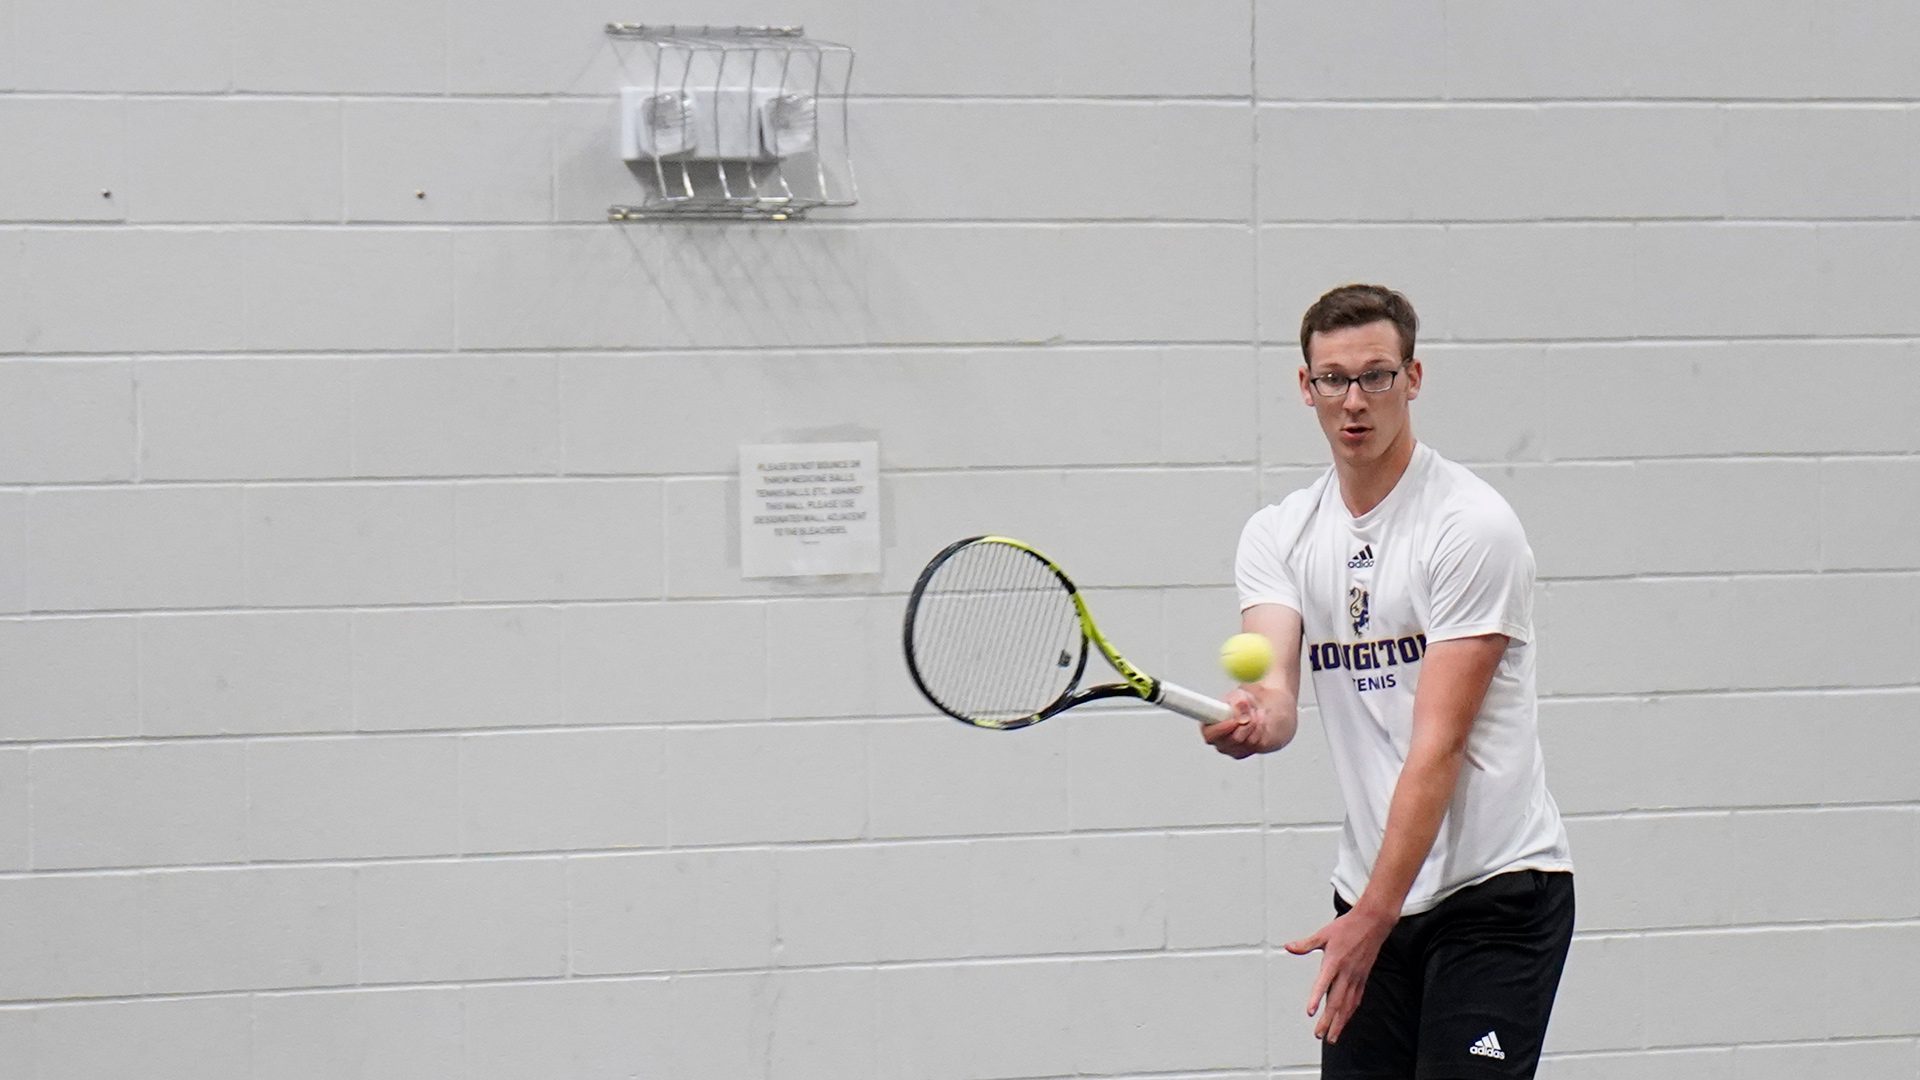 Houghton student Isaac Little hitting tennis ball on indoor court.